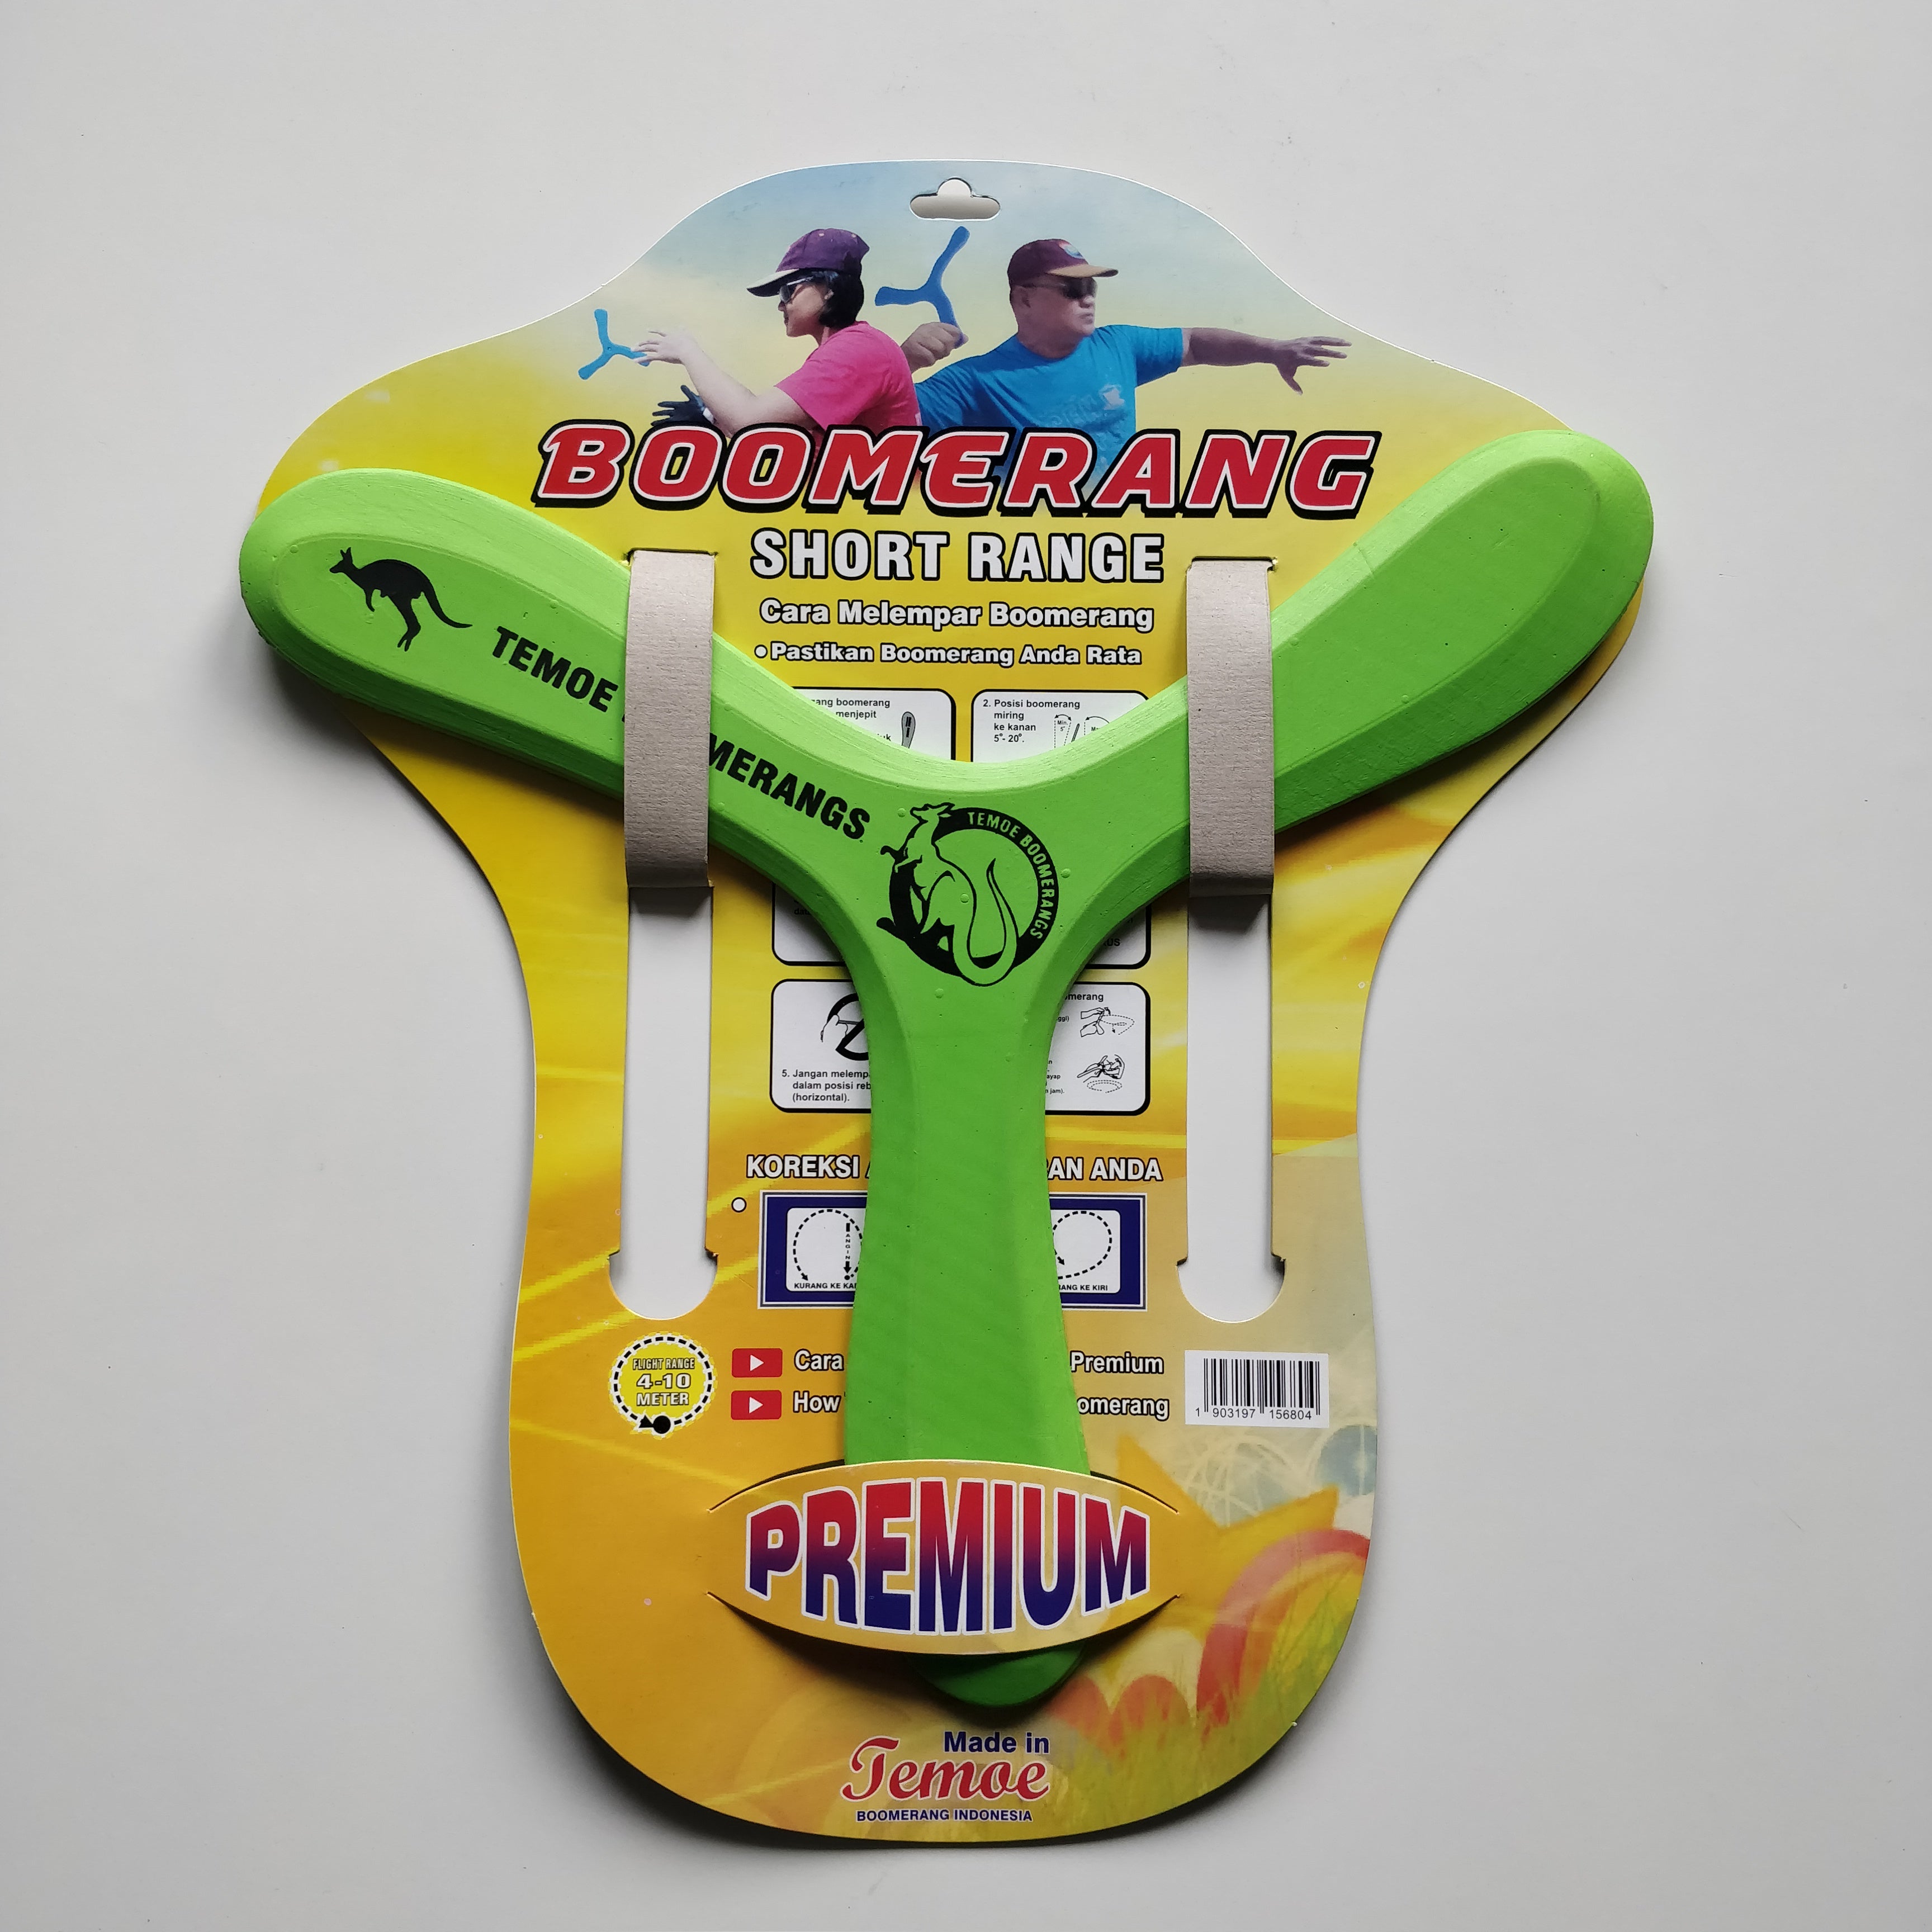 Boomerang Premium